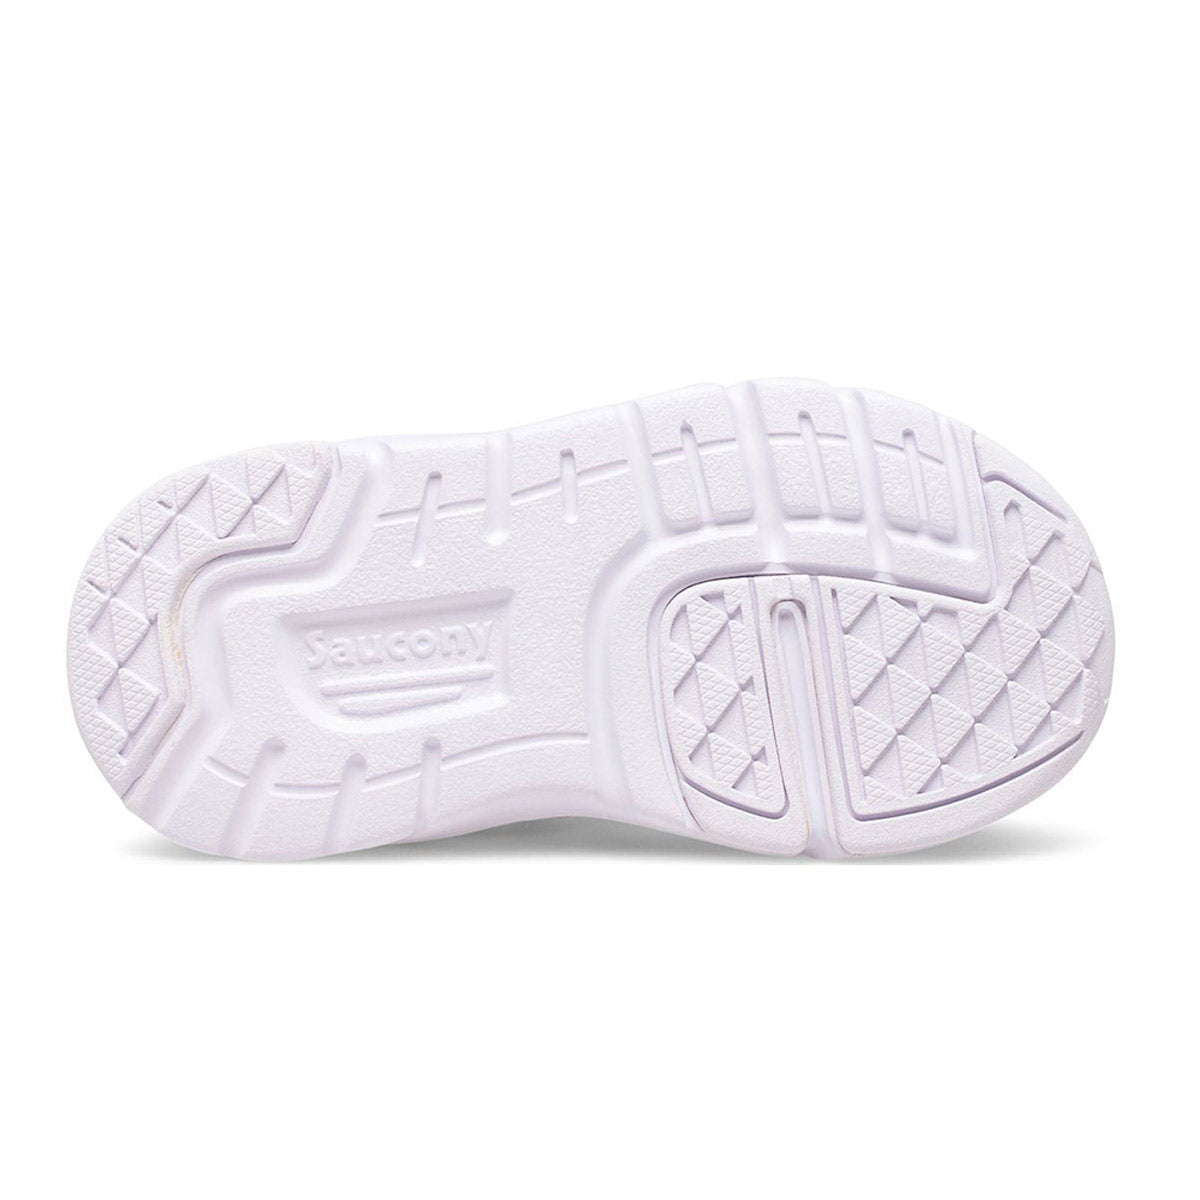 White Saucony Jazz Lite 2.0 Blush running shoe sole displaying tread pattern, brand logo, and alternative closure.